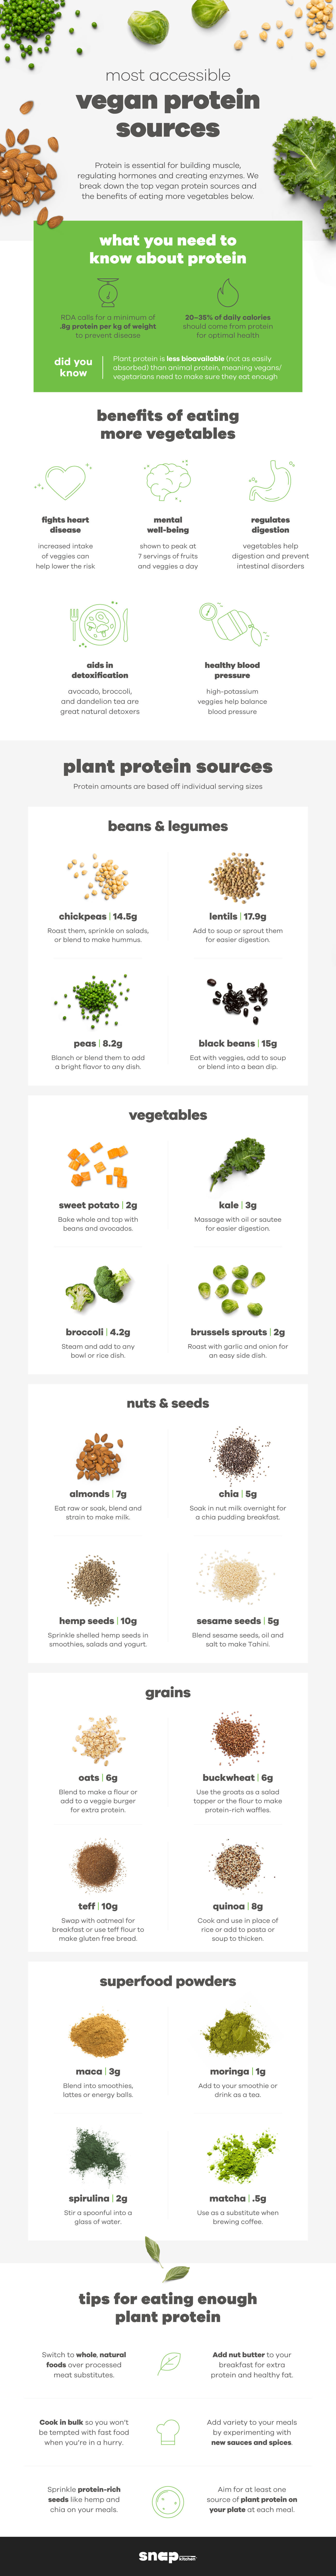 Vegan protein sources infographic